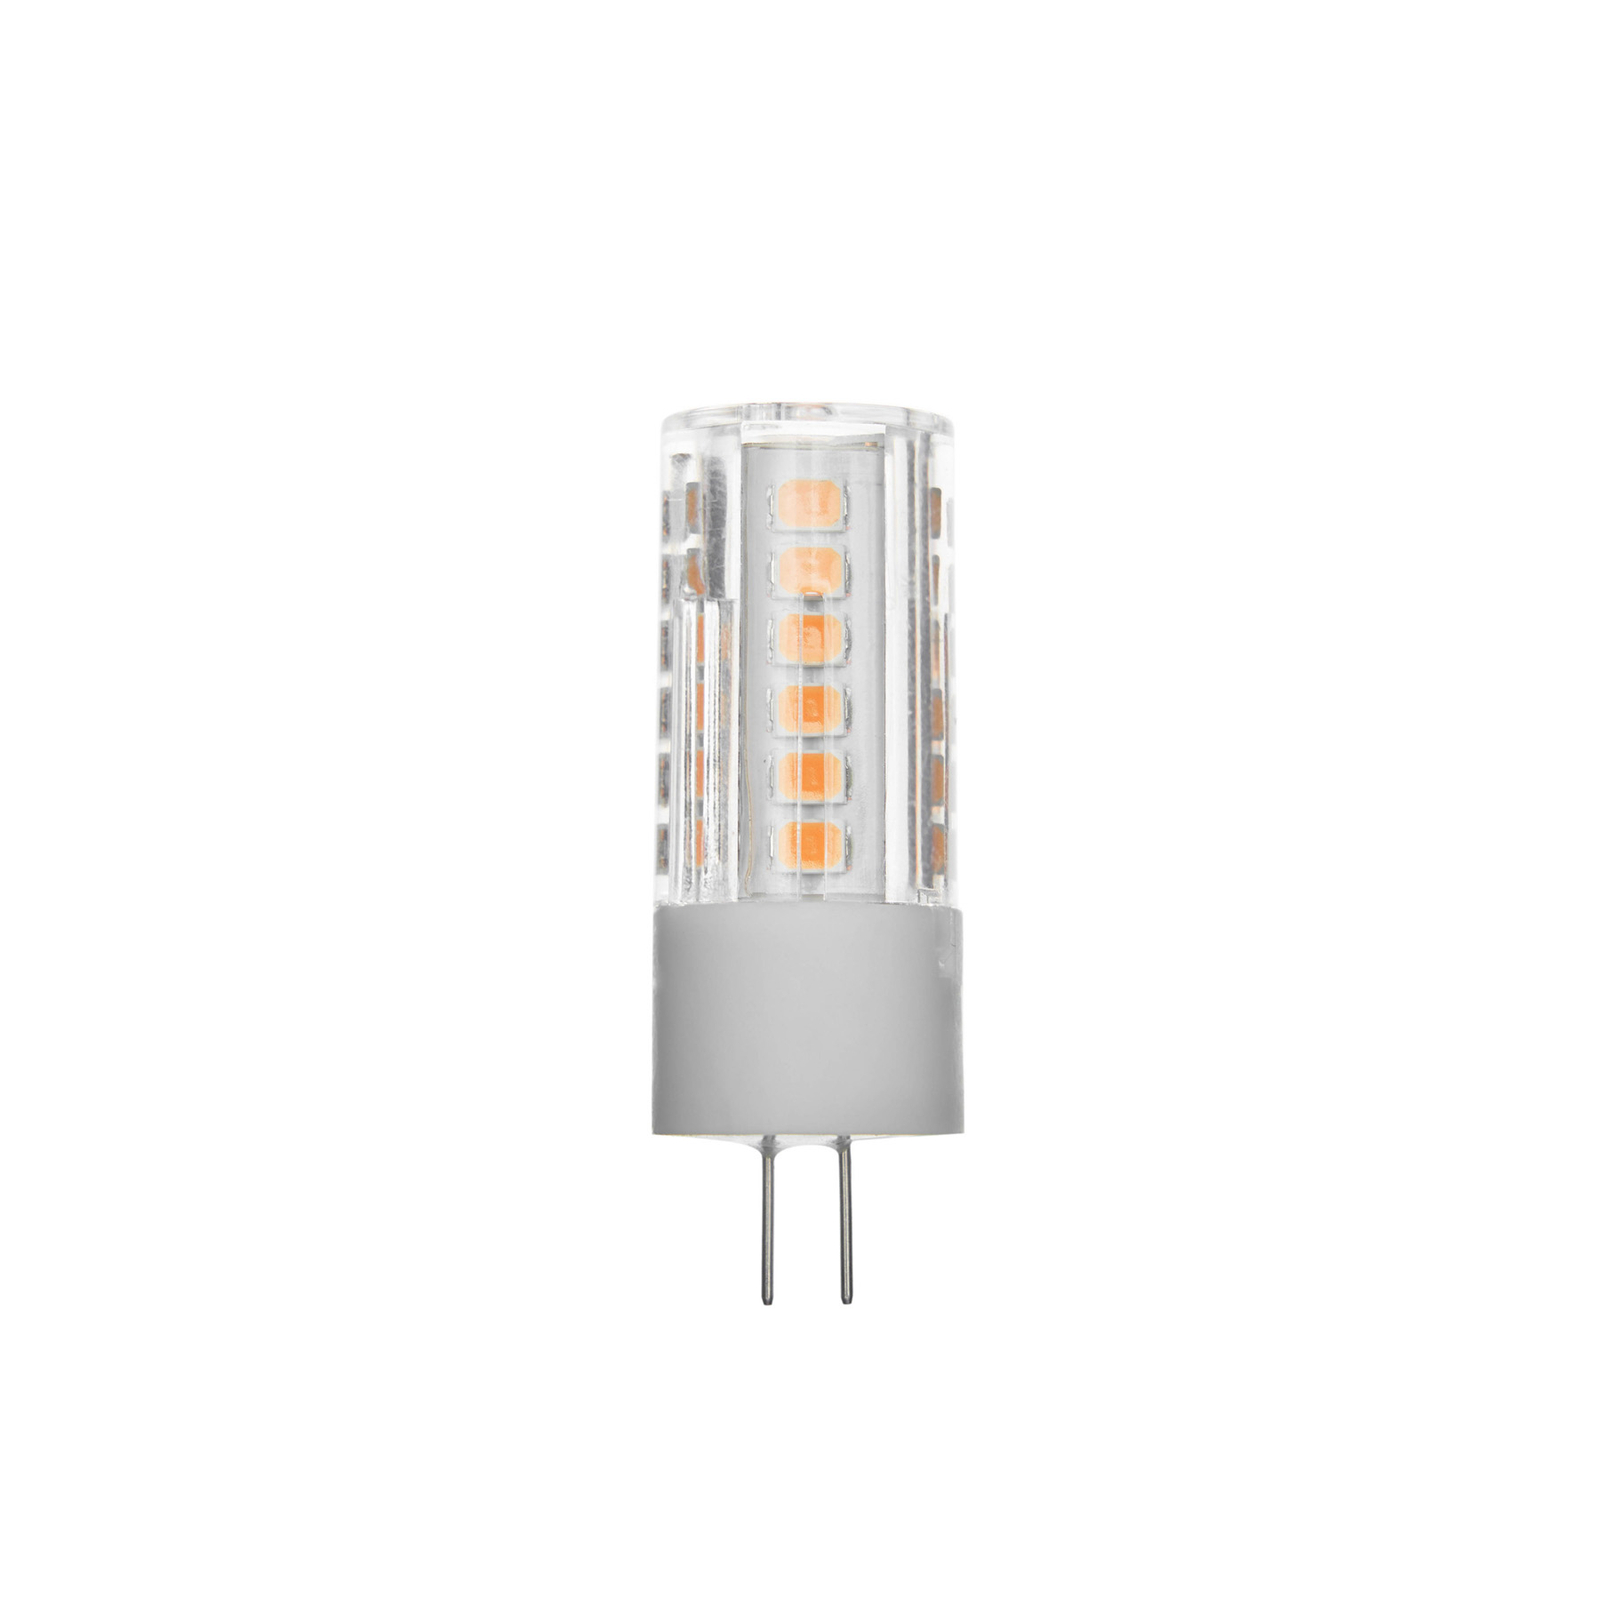 Arcchio LED stiftlamp G4 3,4W 2.700K per 4